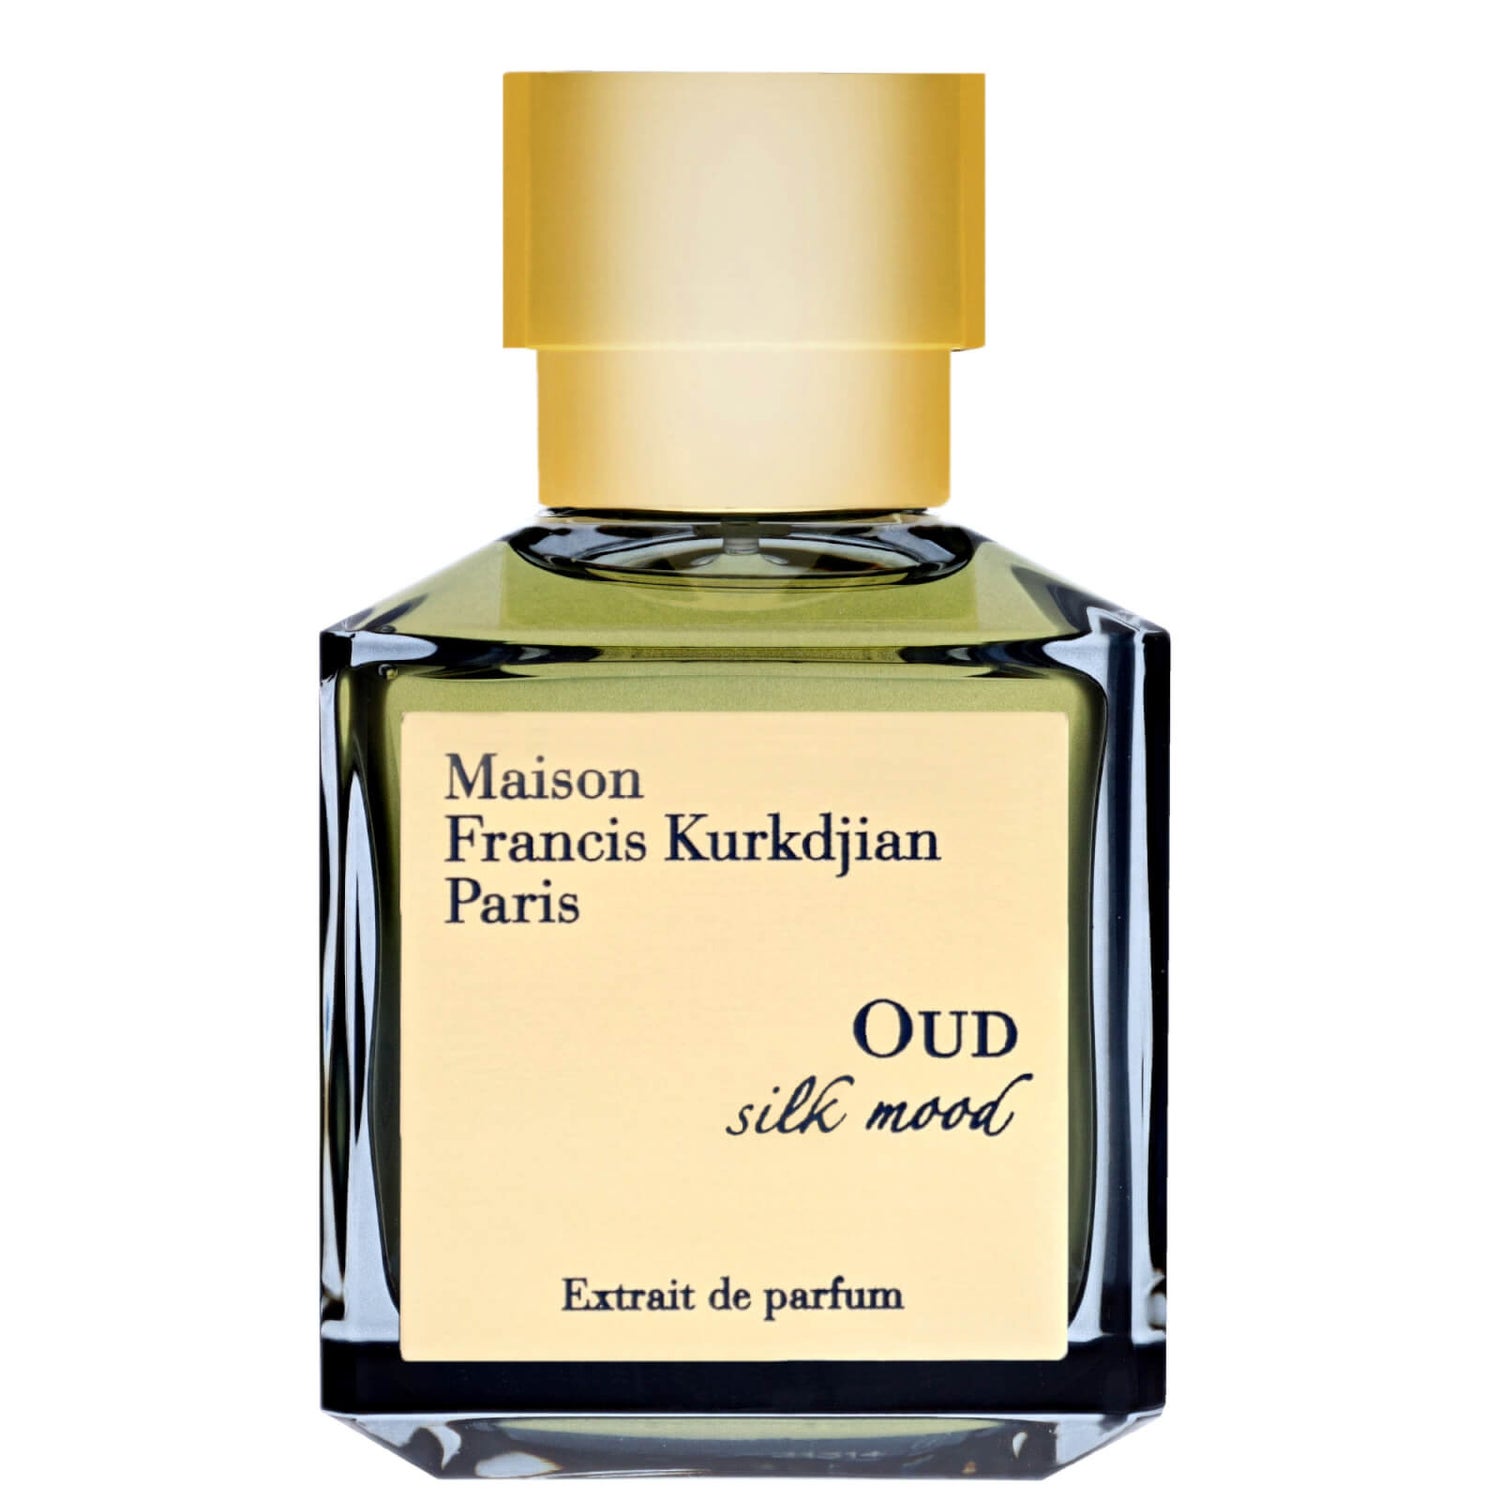 Maison Francis Kurkdjian Oud Silk Mood 70ml